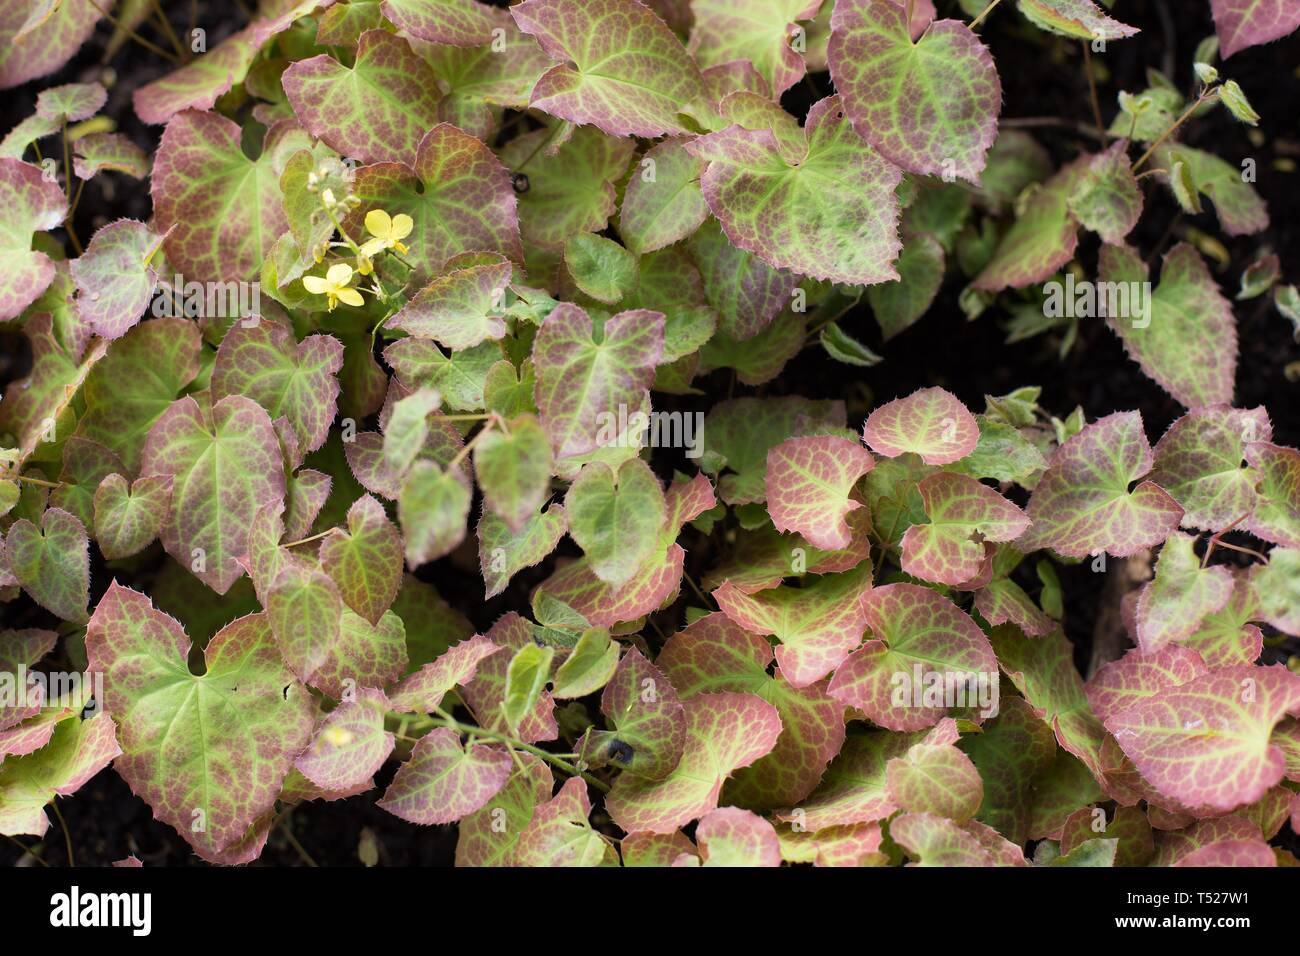 Barrenwort epimedium at the Oregon Garden in Silverton, Oregon, USA. Stock Photo